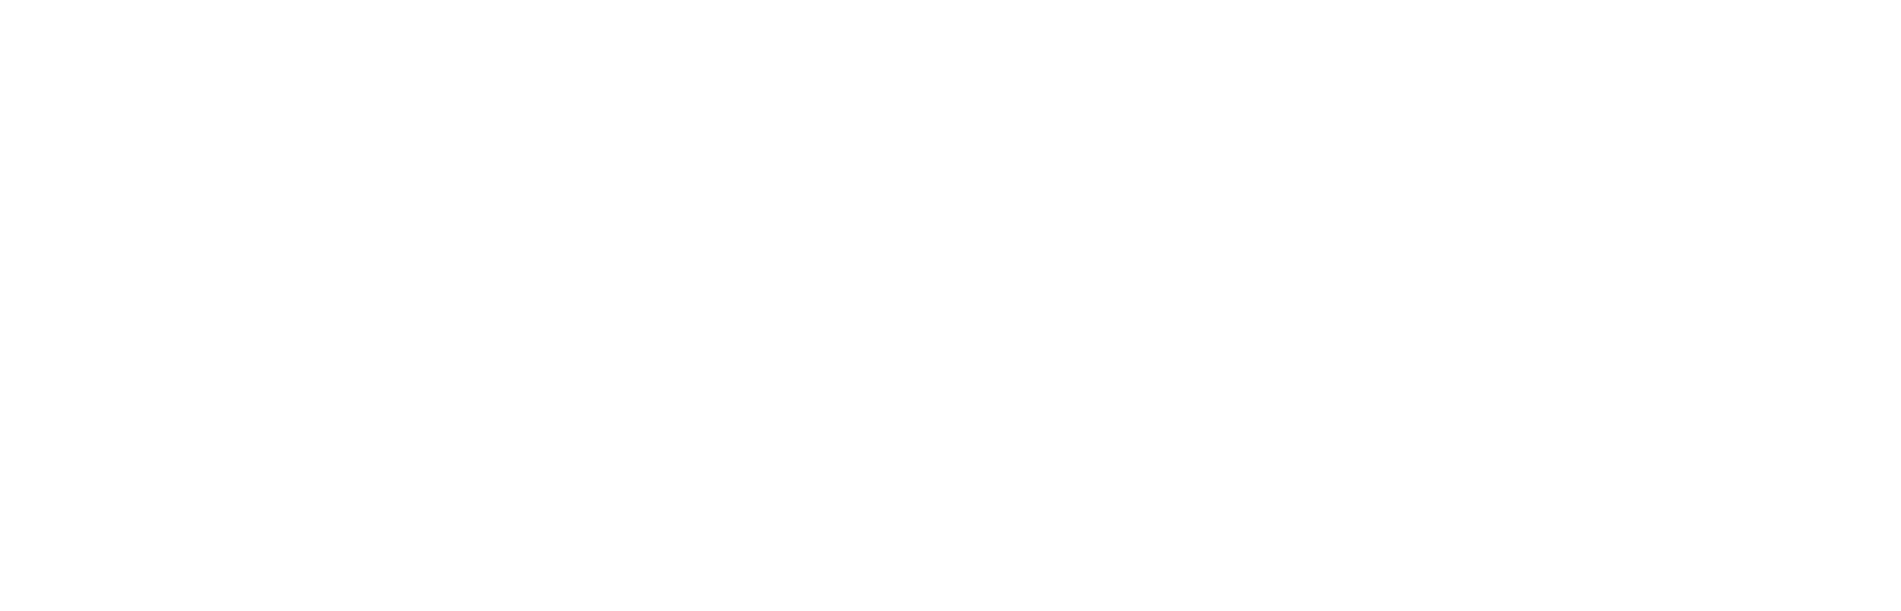 Broadband Communications Association of Pennsylvania